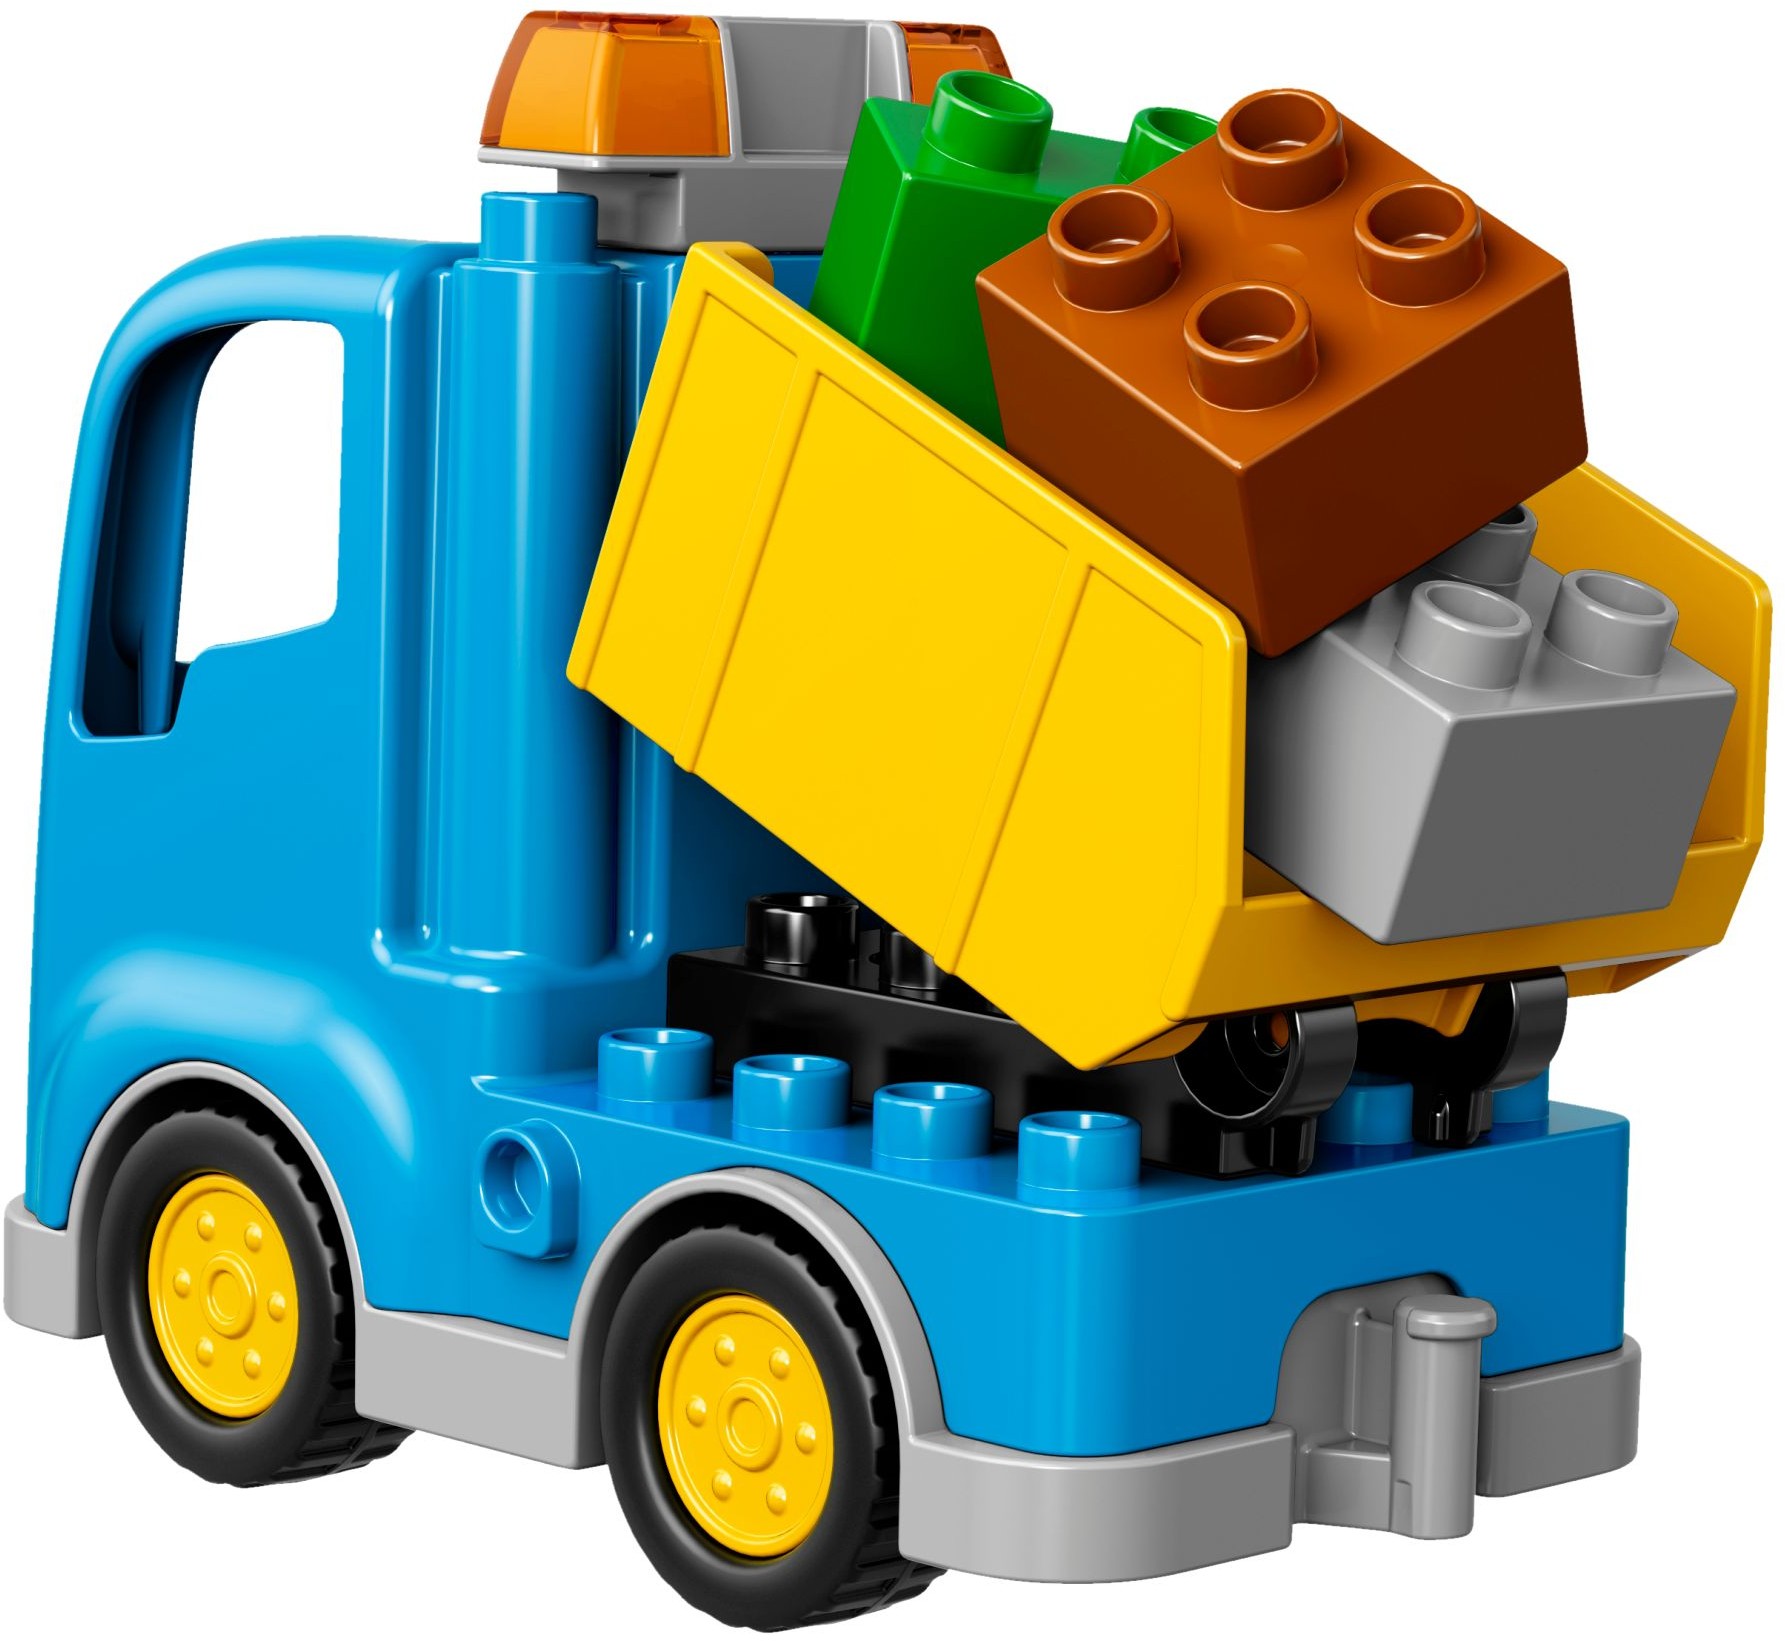 1x Lego Duplo Construction Vehicle Truck Red Car Set 9132 3657 3326 duptruck02 